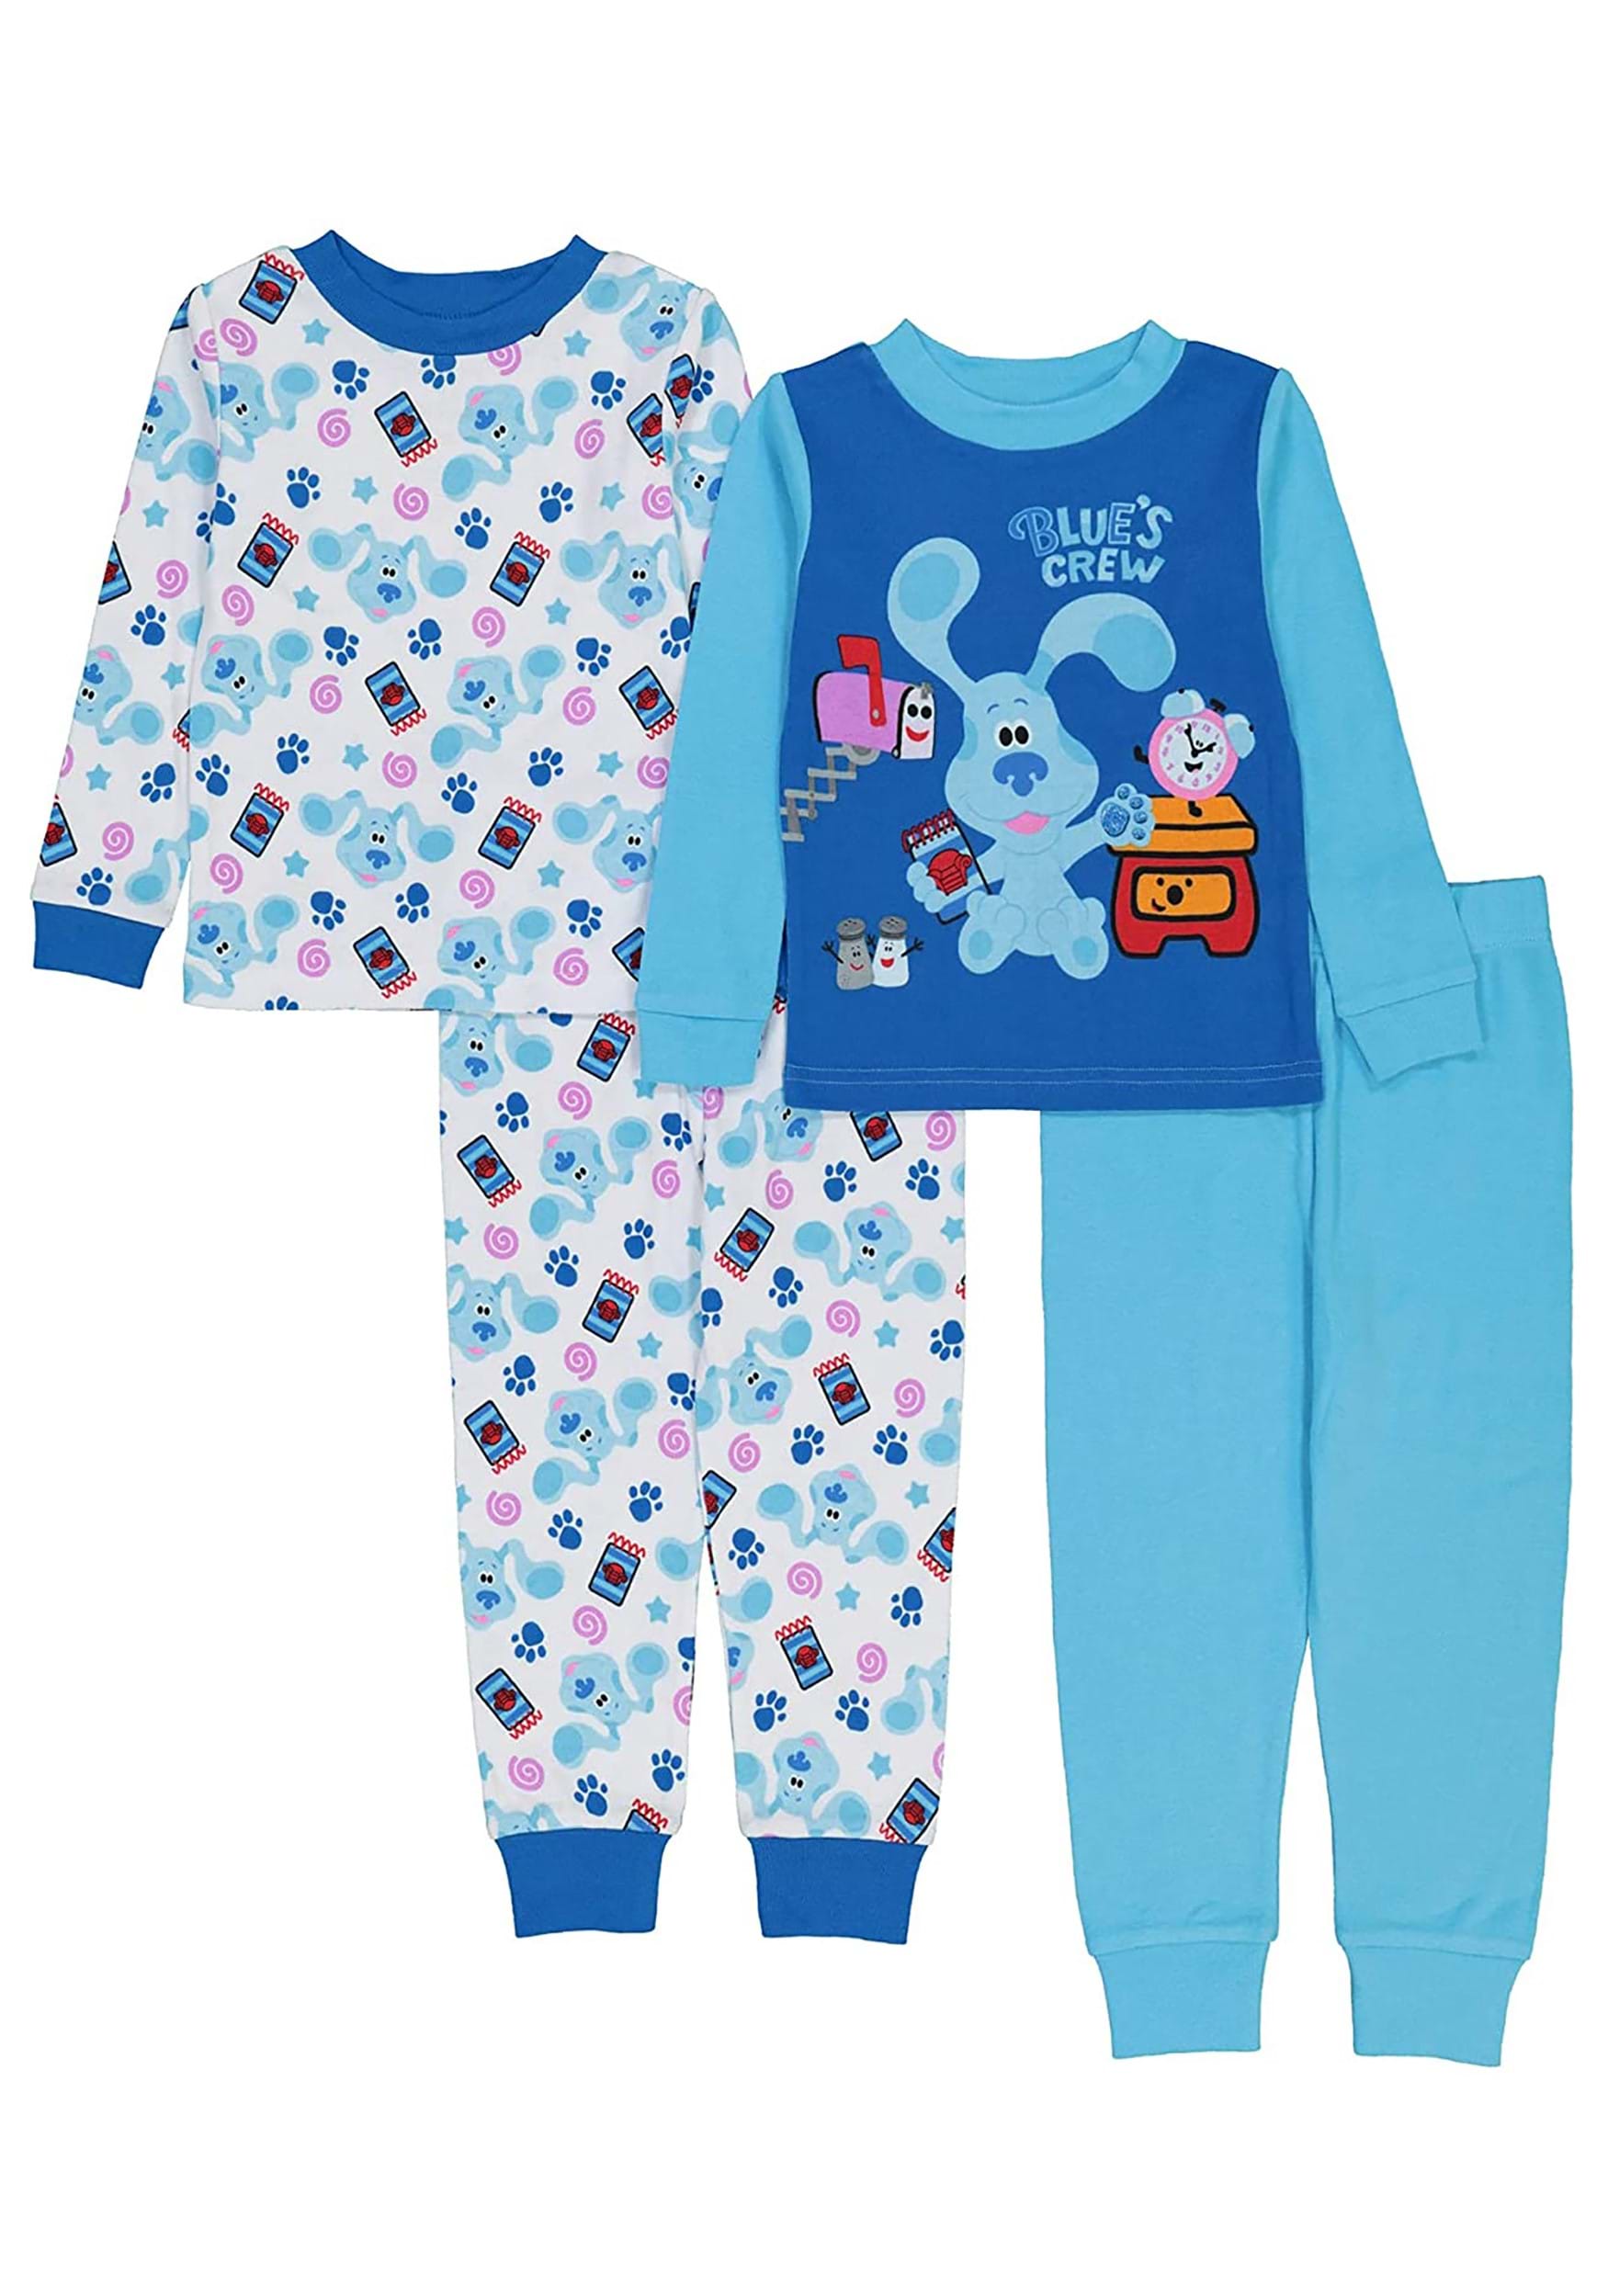 2 Pack Toddler Boys Blues Clues Pajama Set